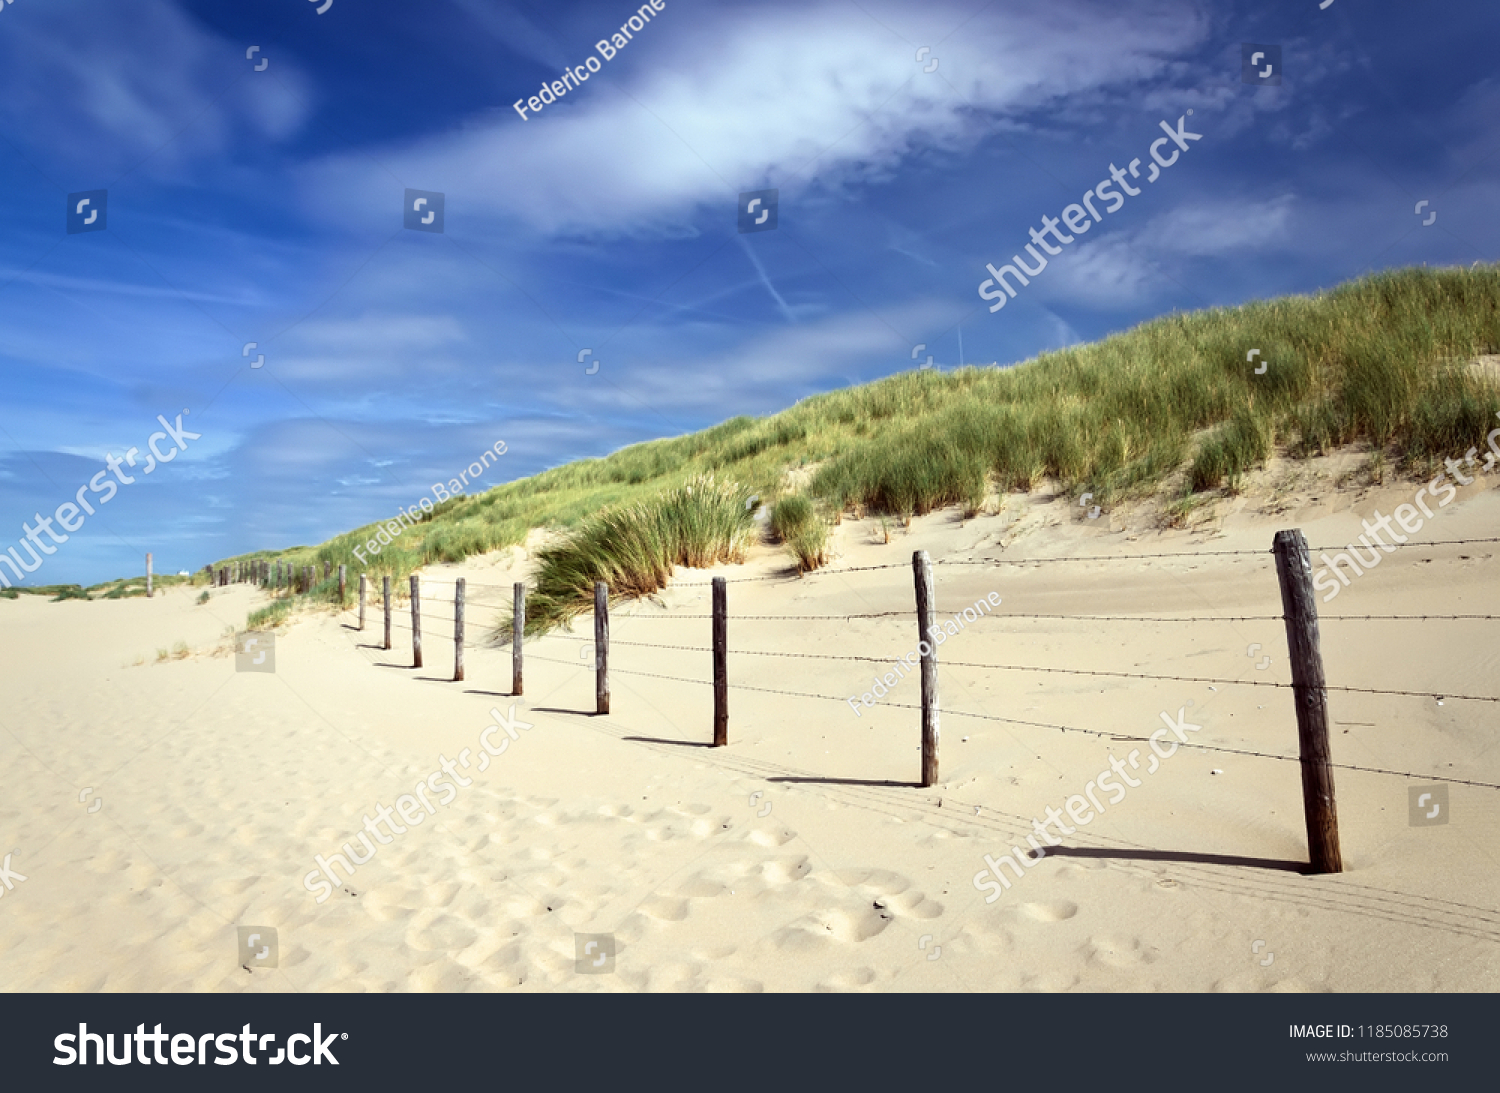 stock-photo-fence-on-the-beach-wonderful